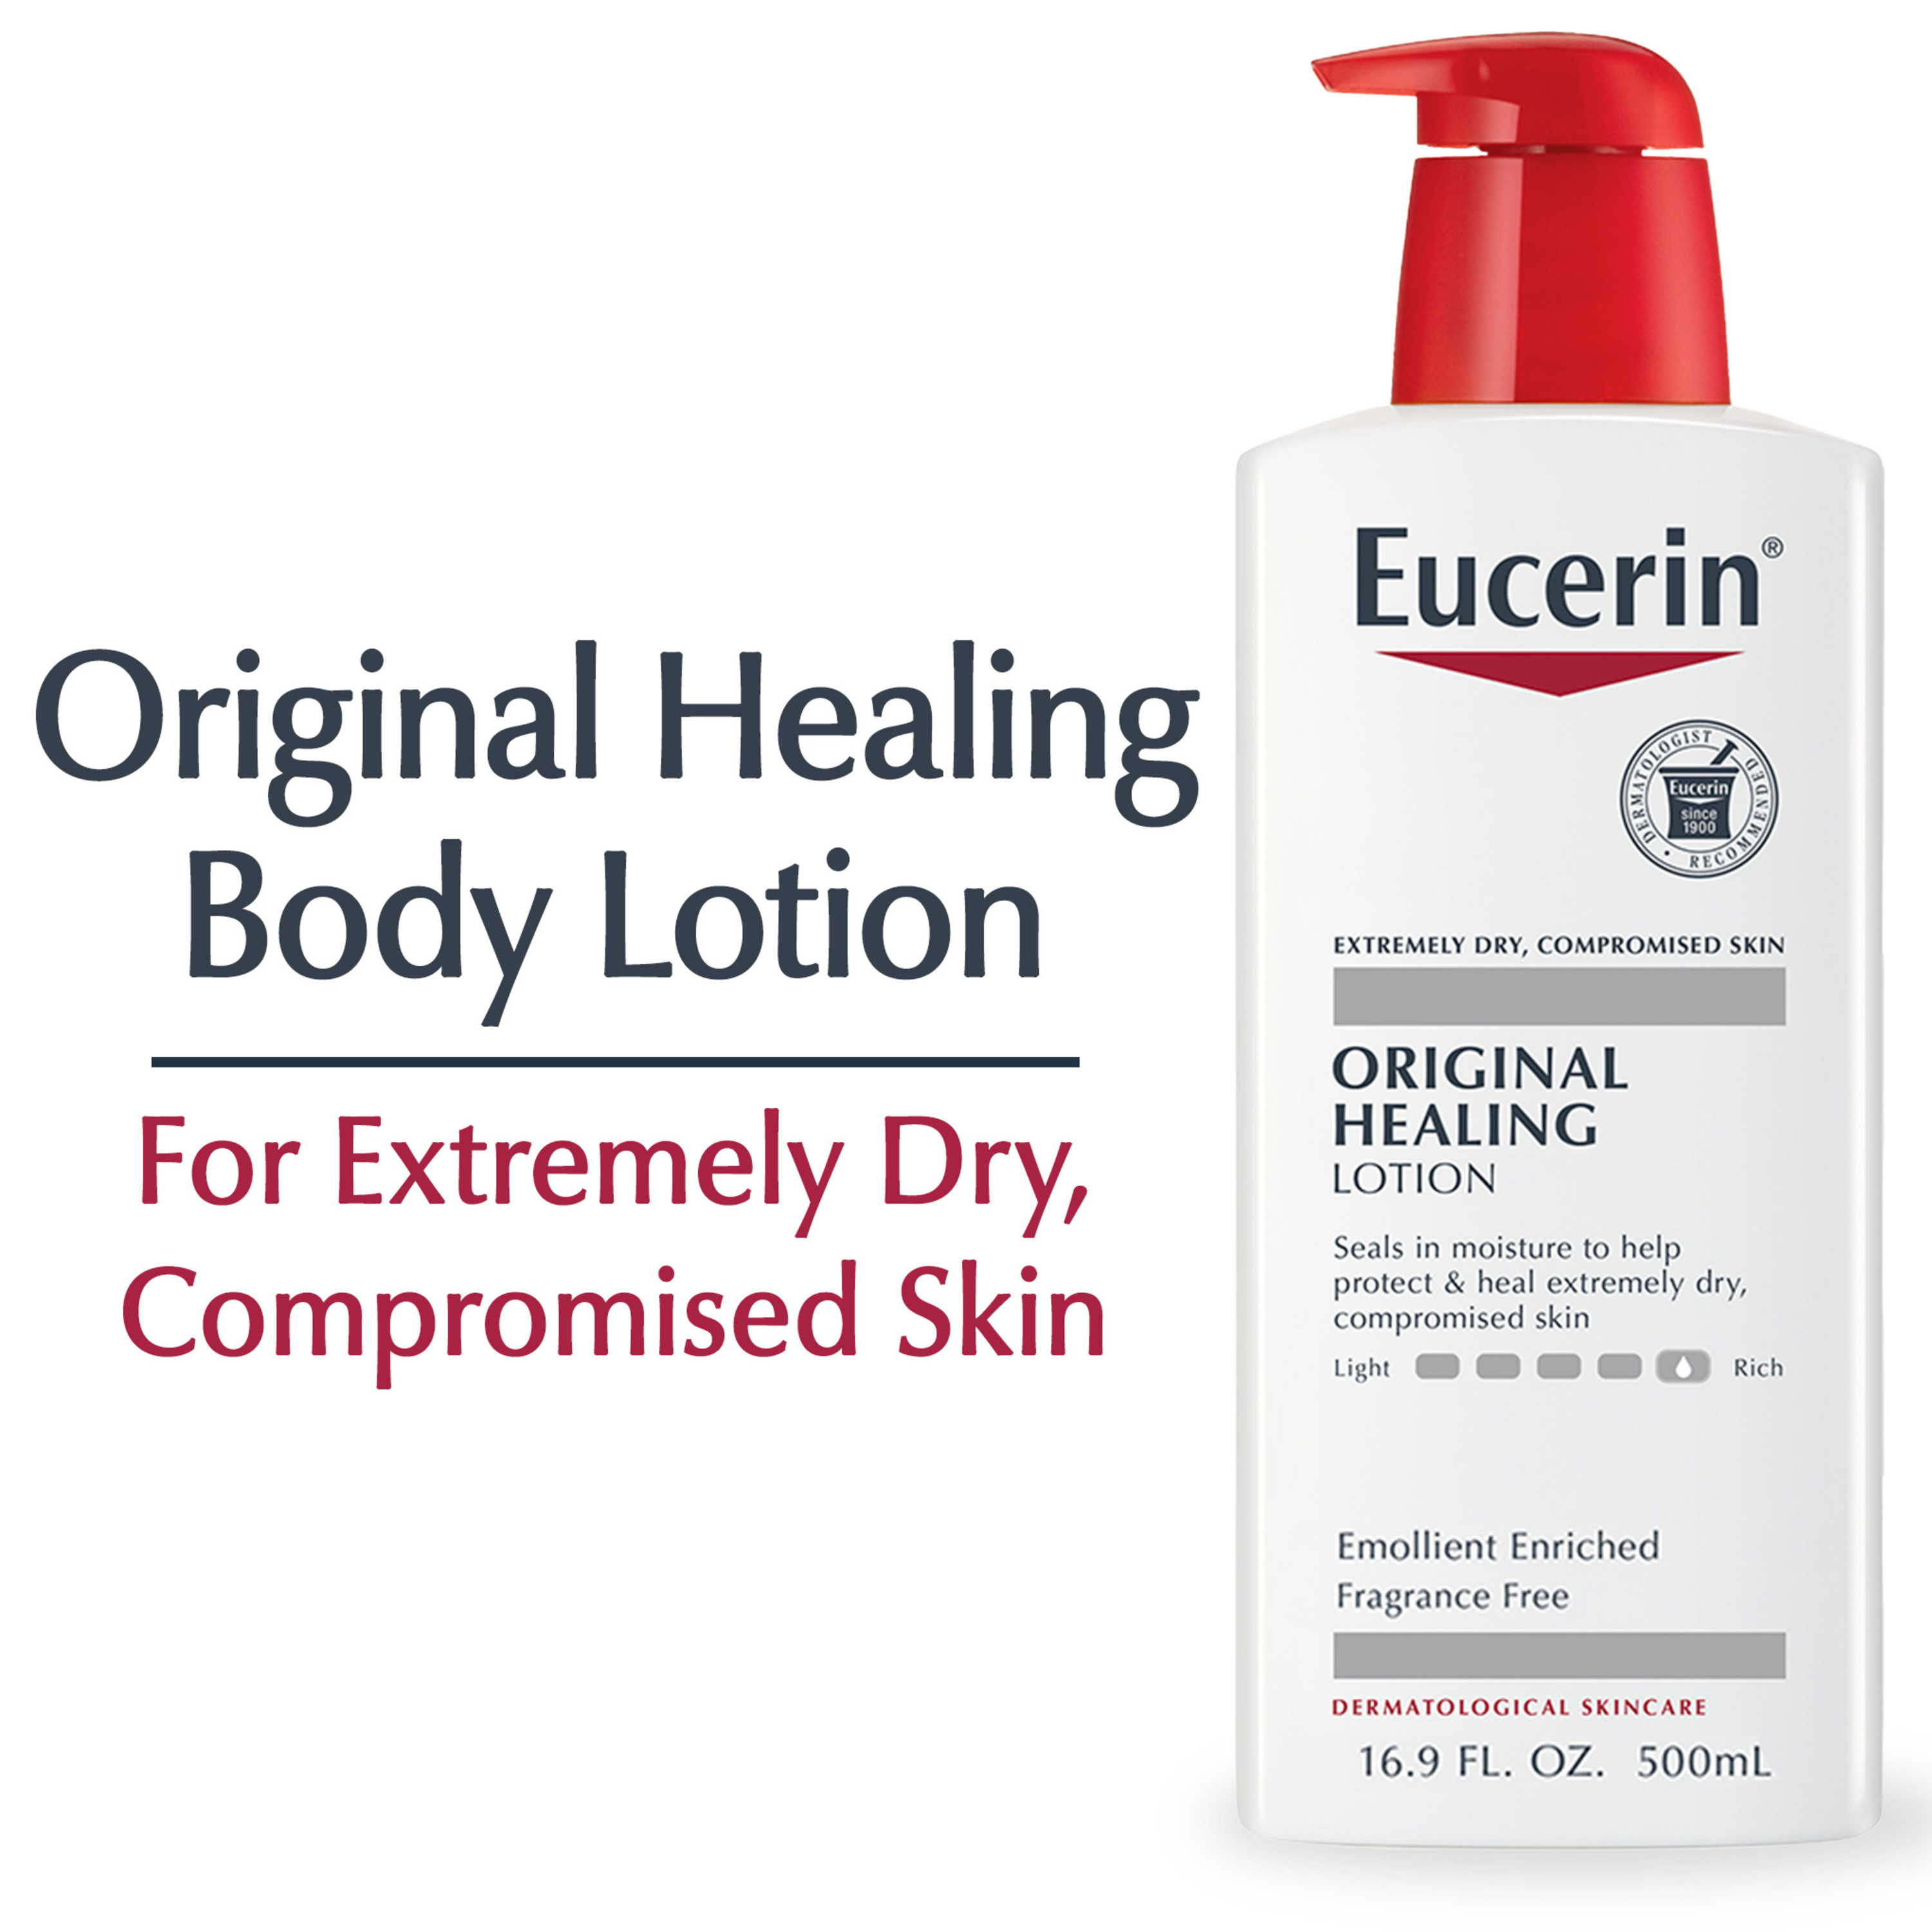 Eucerin Original Healing Body Lotion, Fragrance Free, 16.9 fl oz Bottle - image 1 of 14